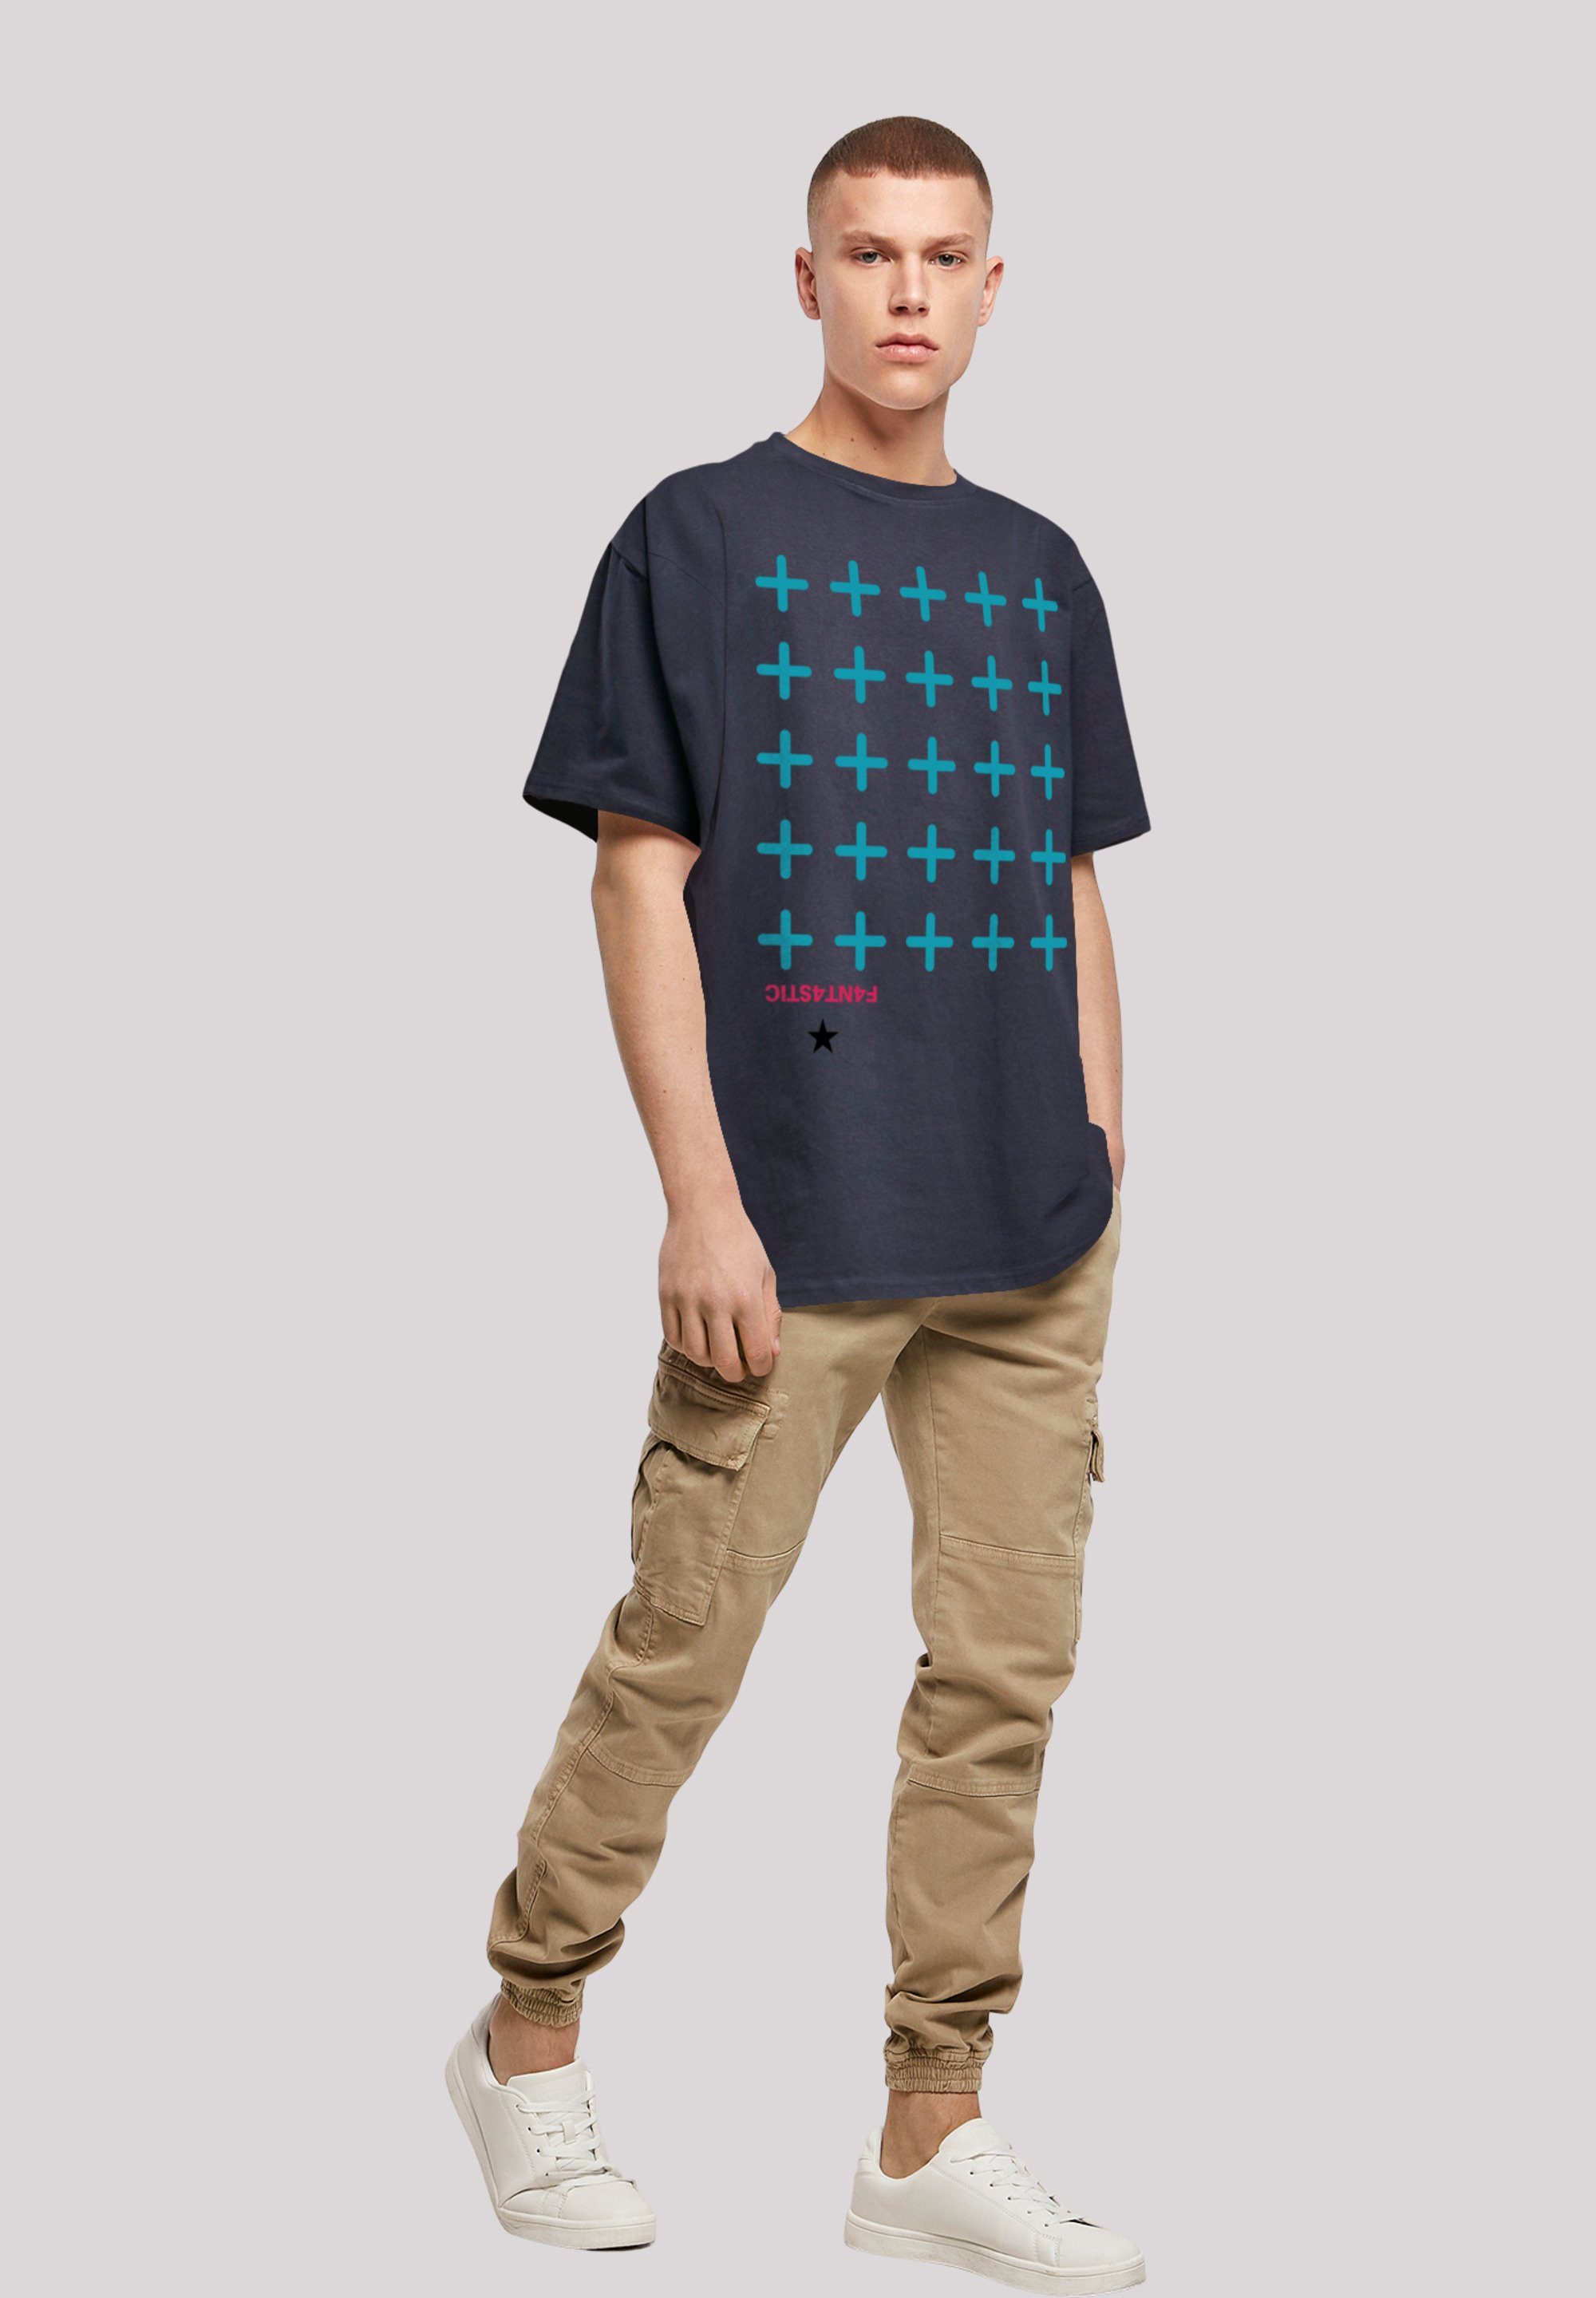 F4NT4STIC T-Shirt Kreuze Blau Print navy